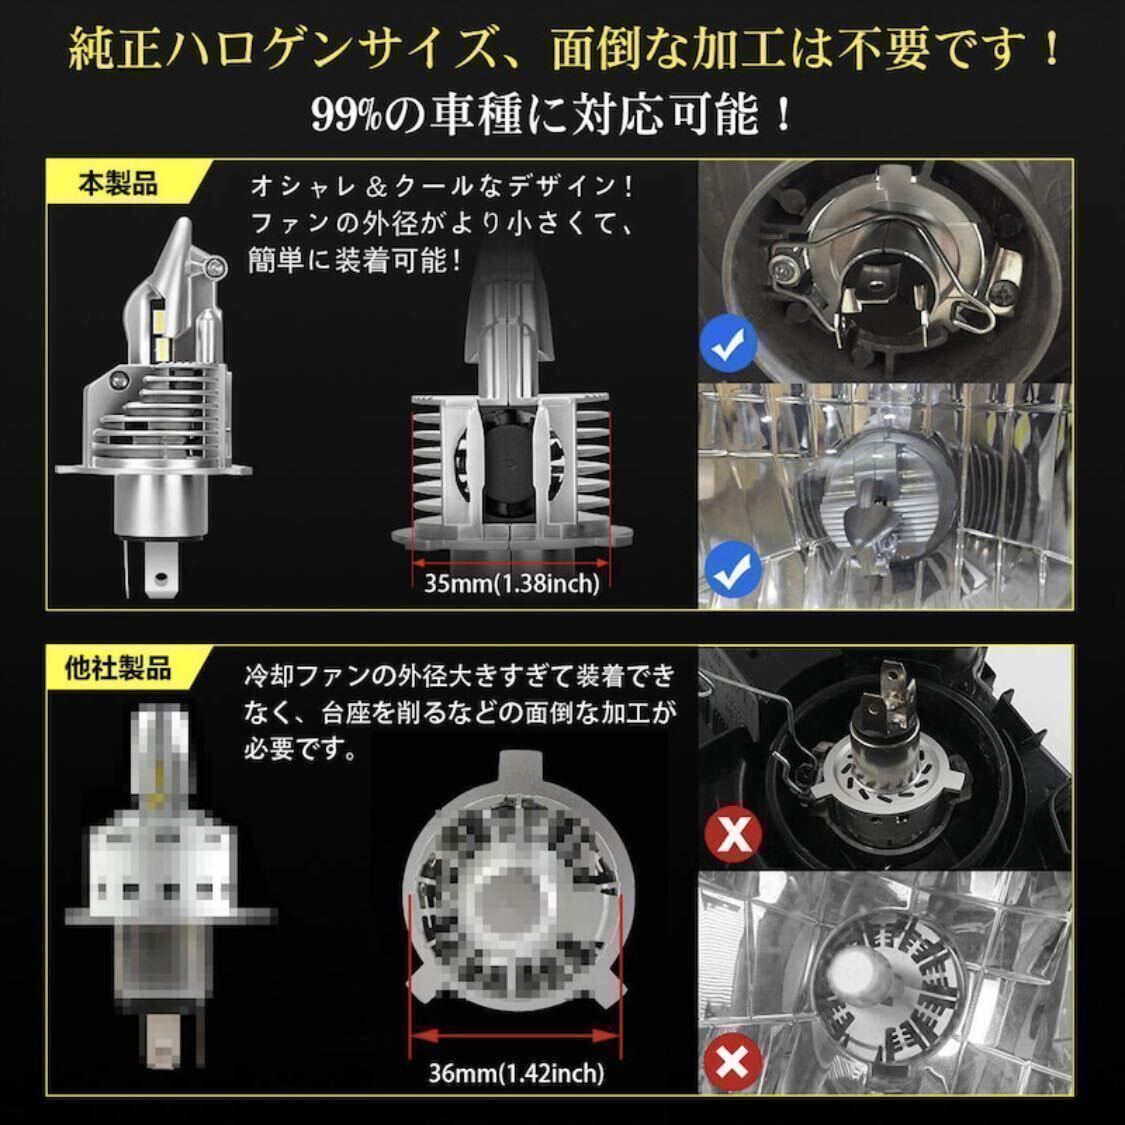 H4 LED head light recent model valve(bulb) foglamp car Hi/Lo 16000LM Toyota Honda Suzuki Nissan Subaru Mitsubishi Mazda vehicle inspection correspondence white #H4/c